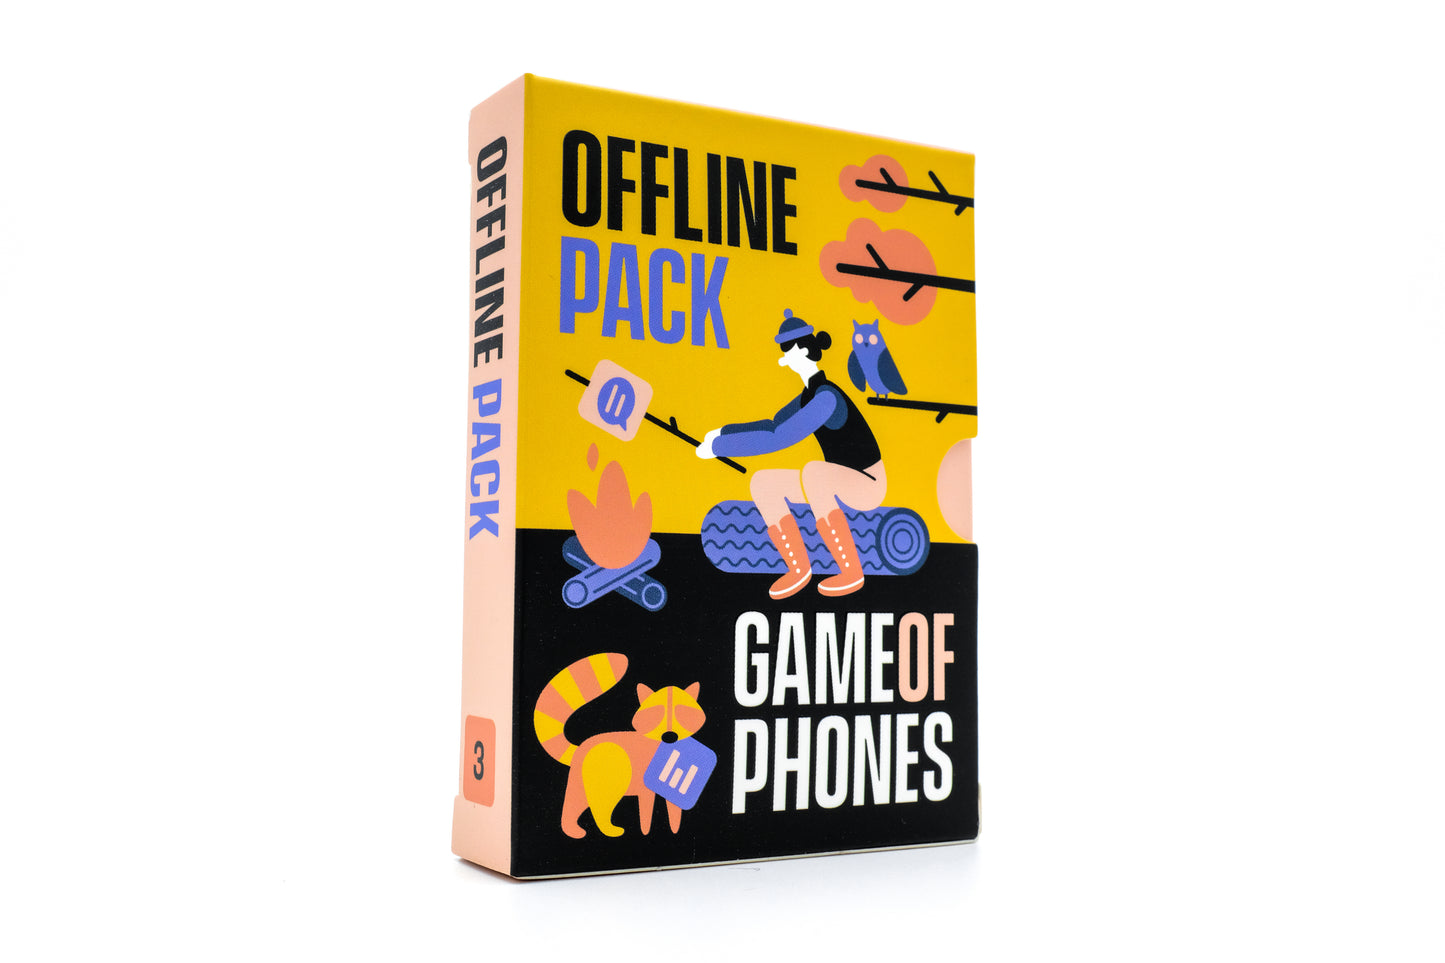 Game of Phones: The Offline Mini Pack